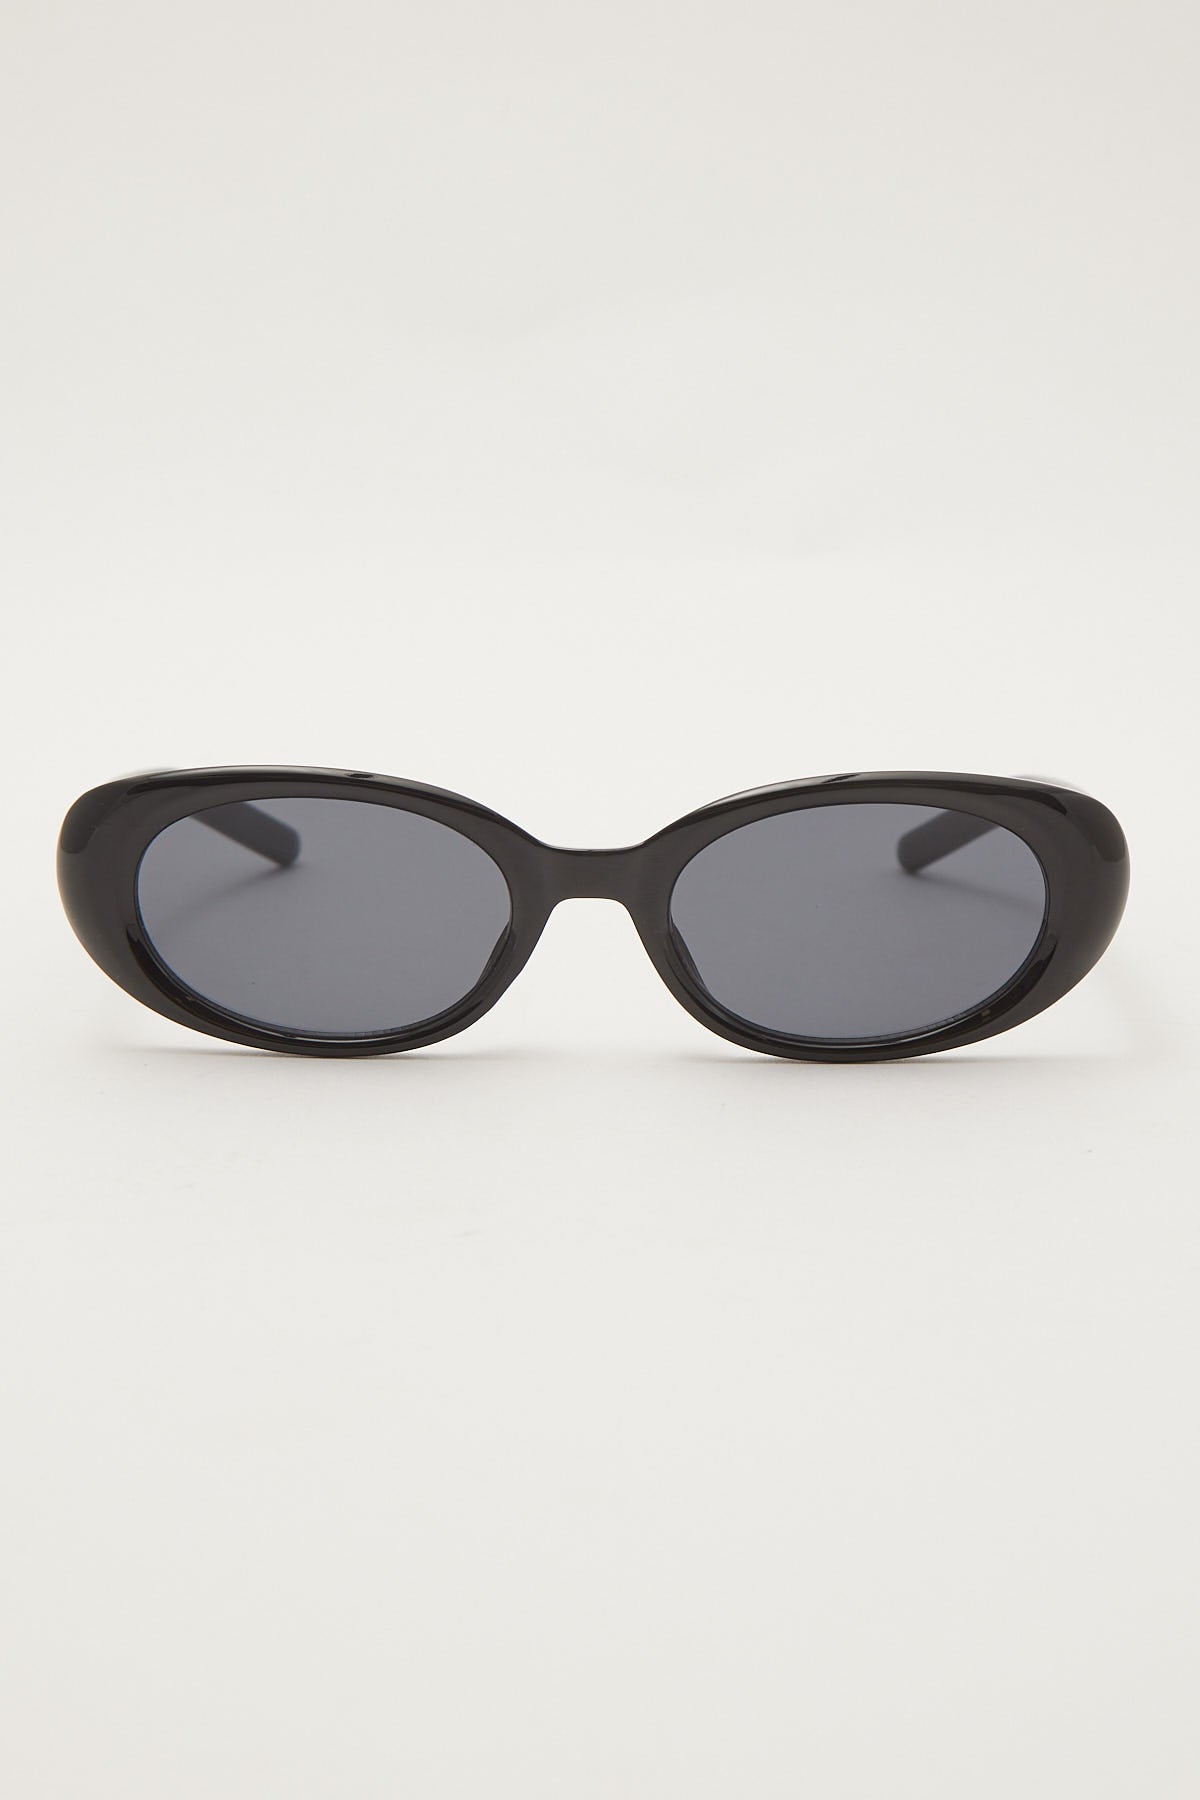 Angels Whisper Monica Sunglasses Black – Universal Store